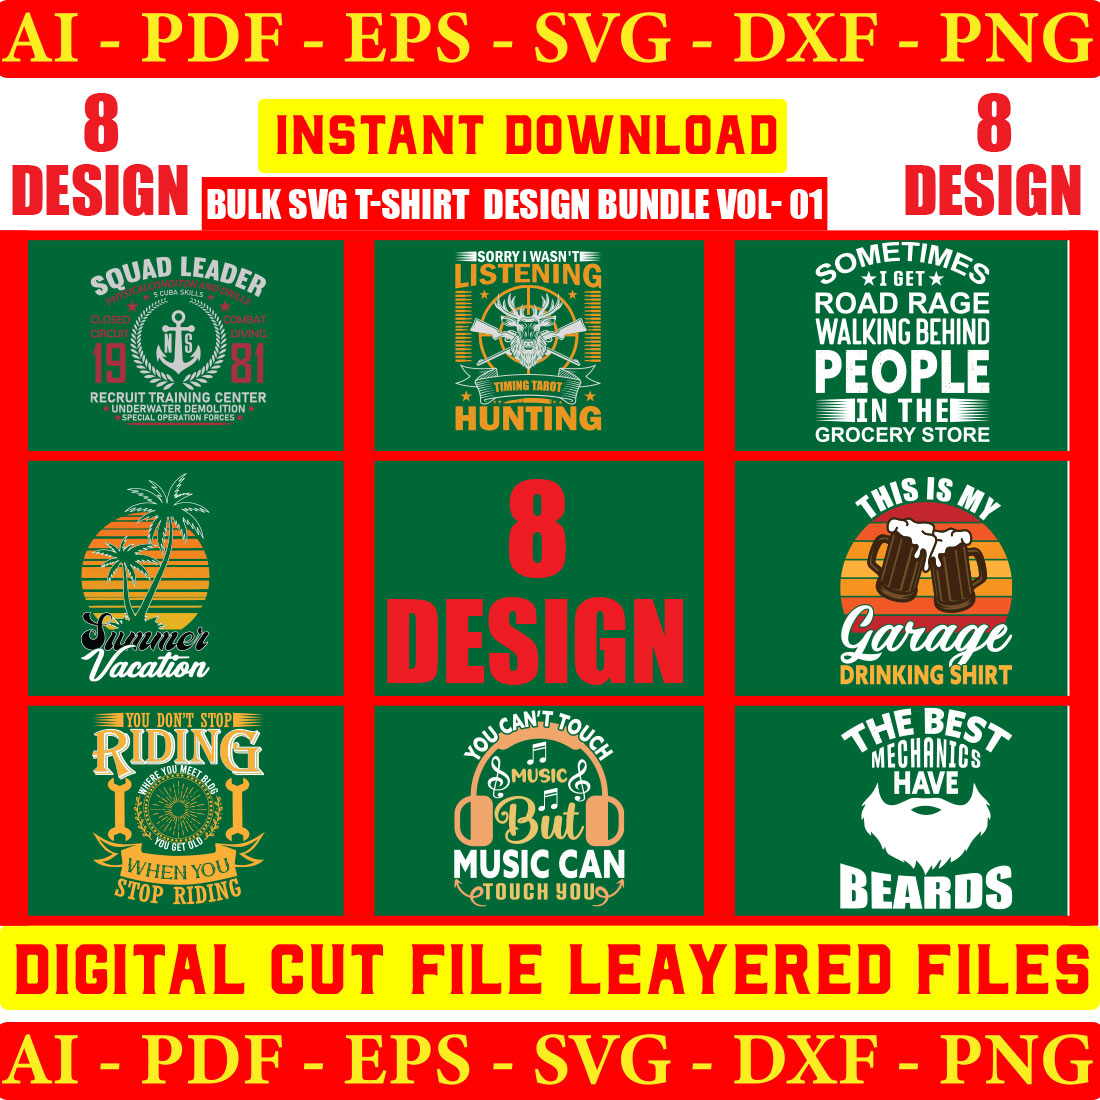 Bulk SVG T-shirt Design Bundle Vol- 08 cover image.